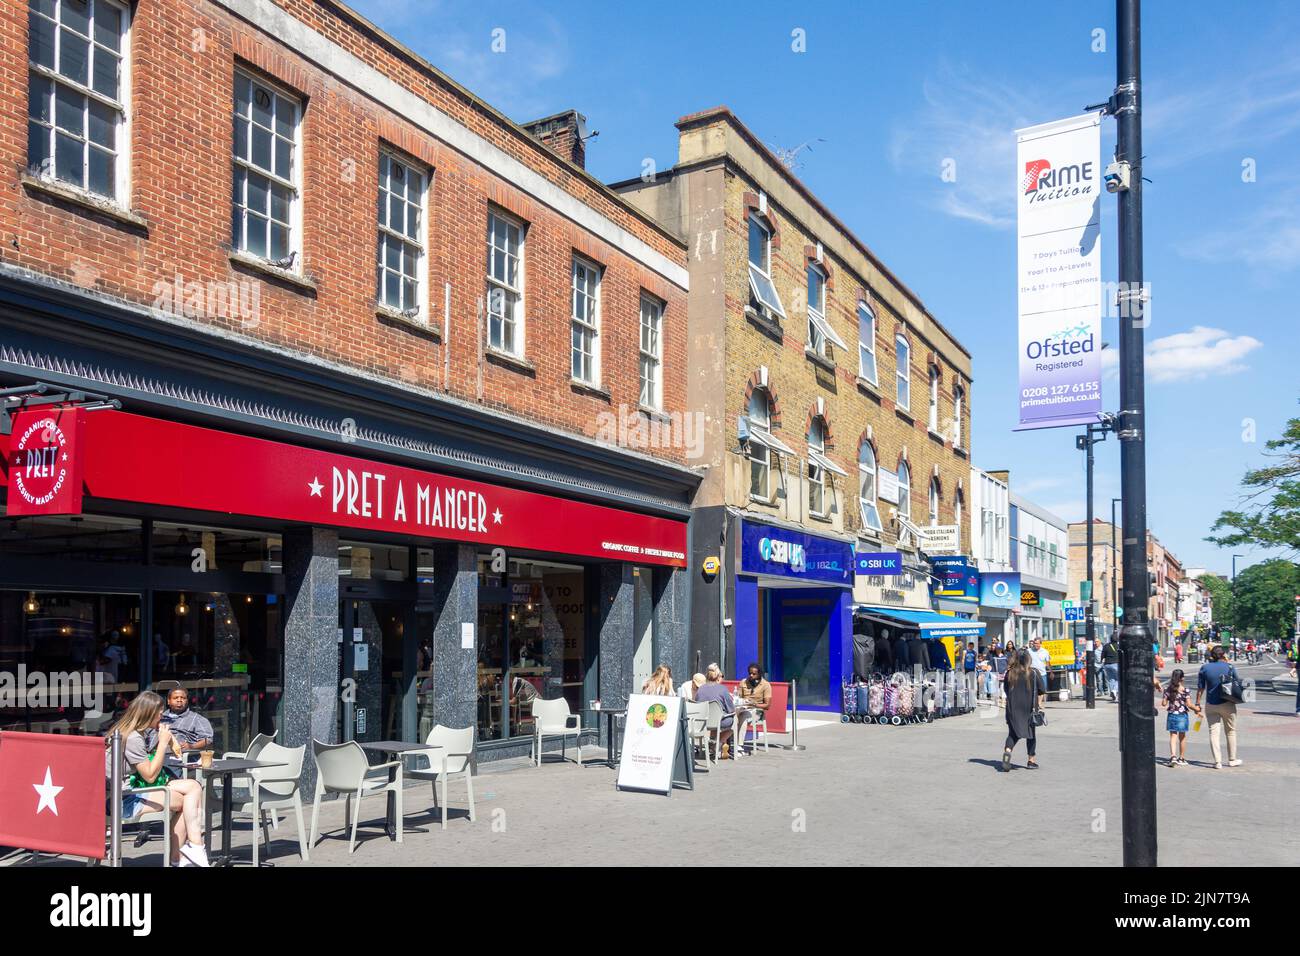 Prét a Manger restaurant, High Street, Hounslow, London Borough of Hounslow, Greater London, Angleterre, Royaume-Uni Banque D'Images